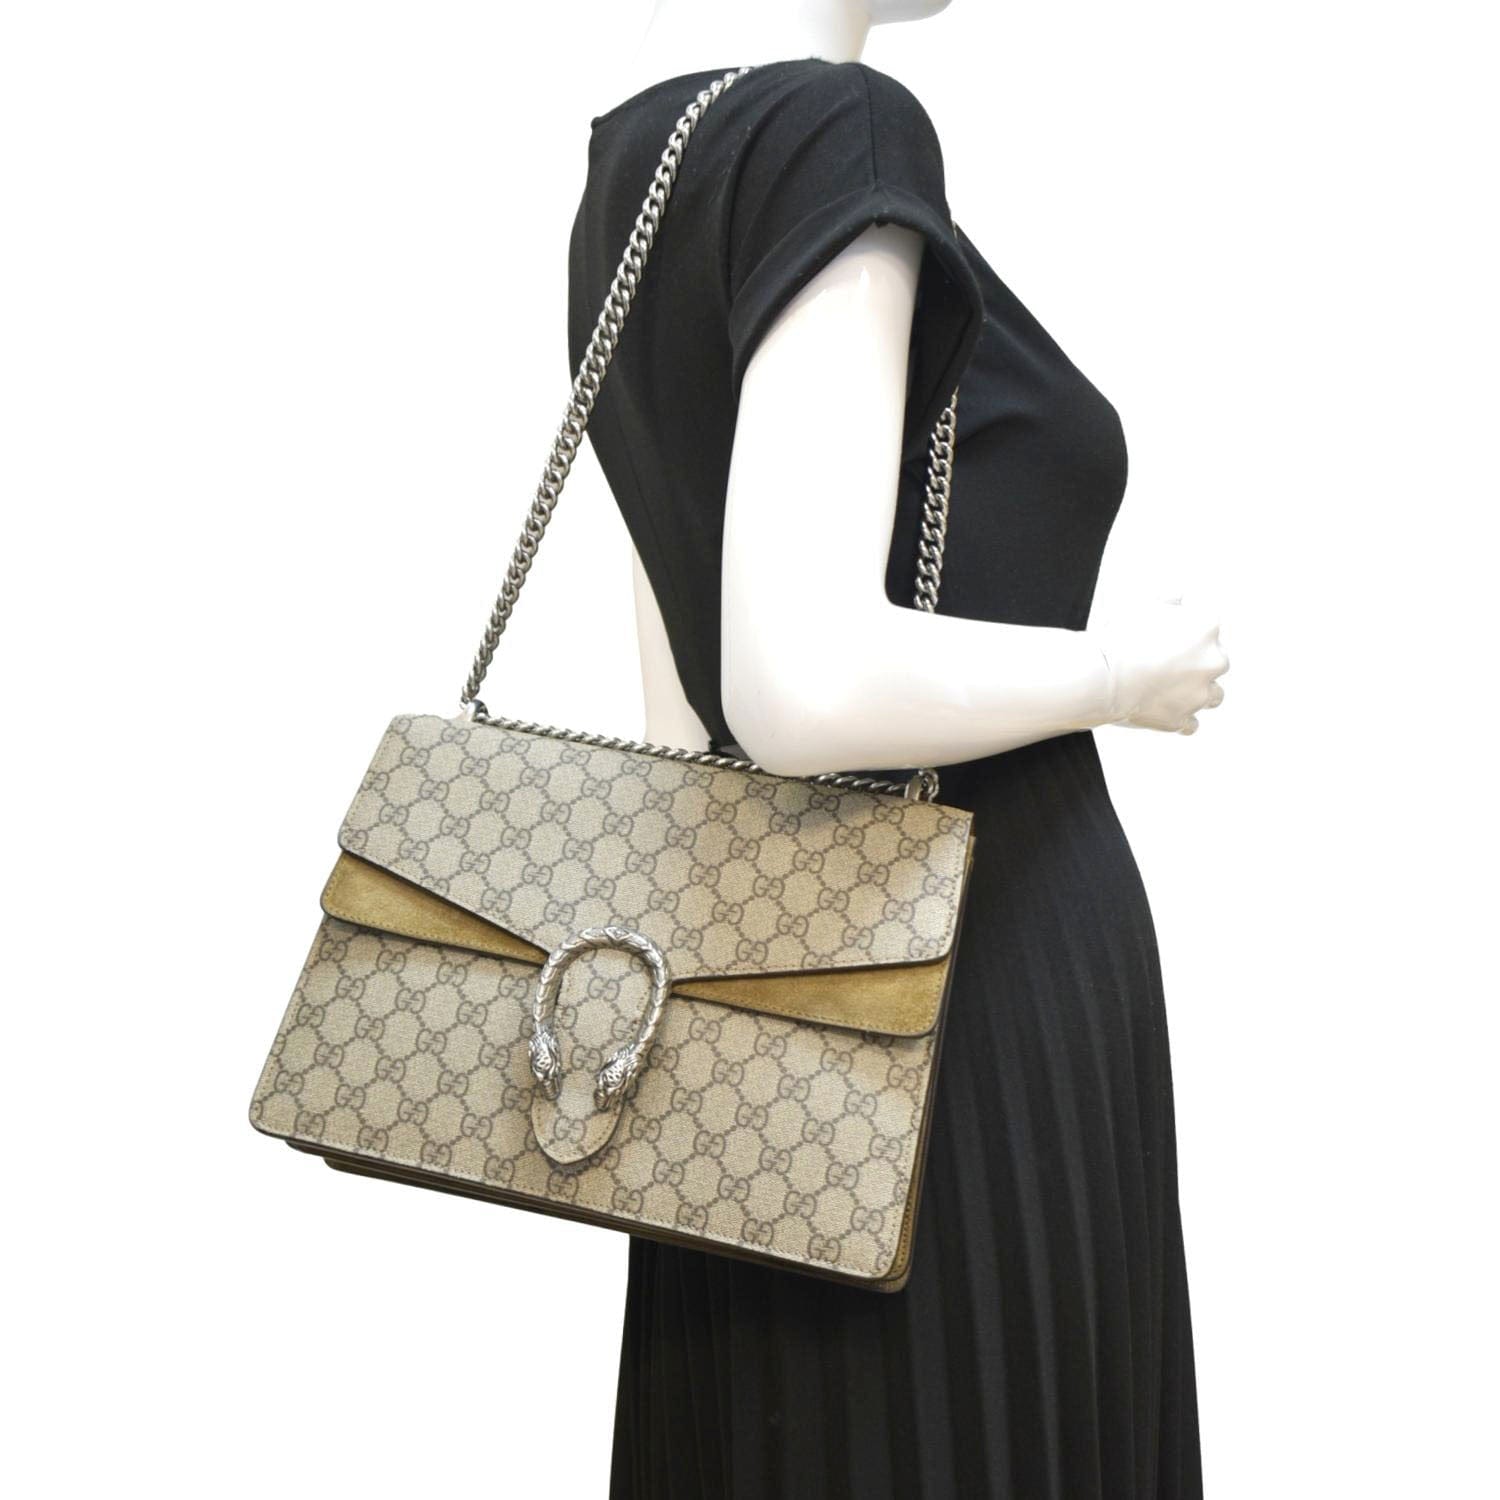 Gucci Dionysus medium GG shoulder bag